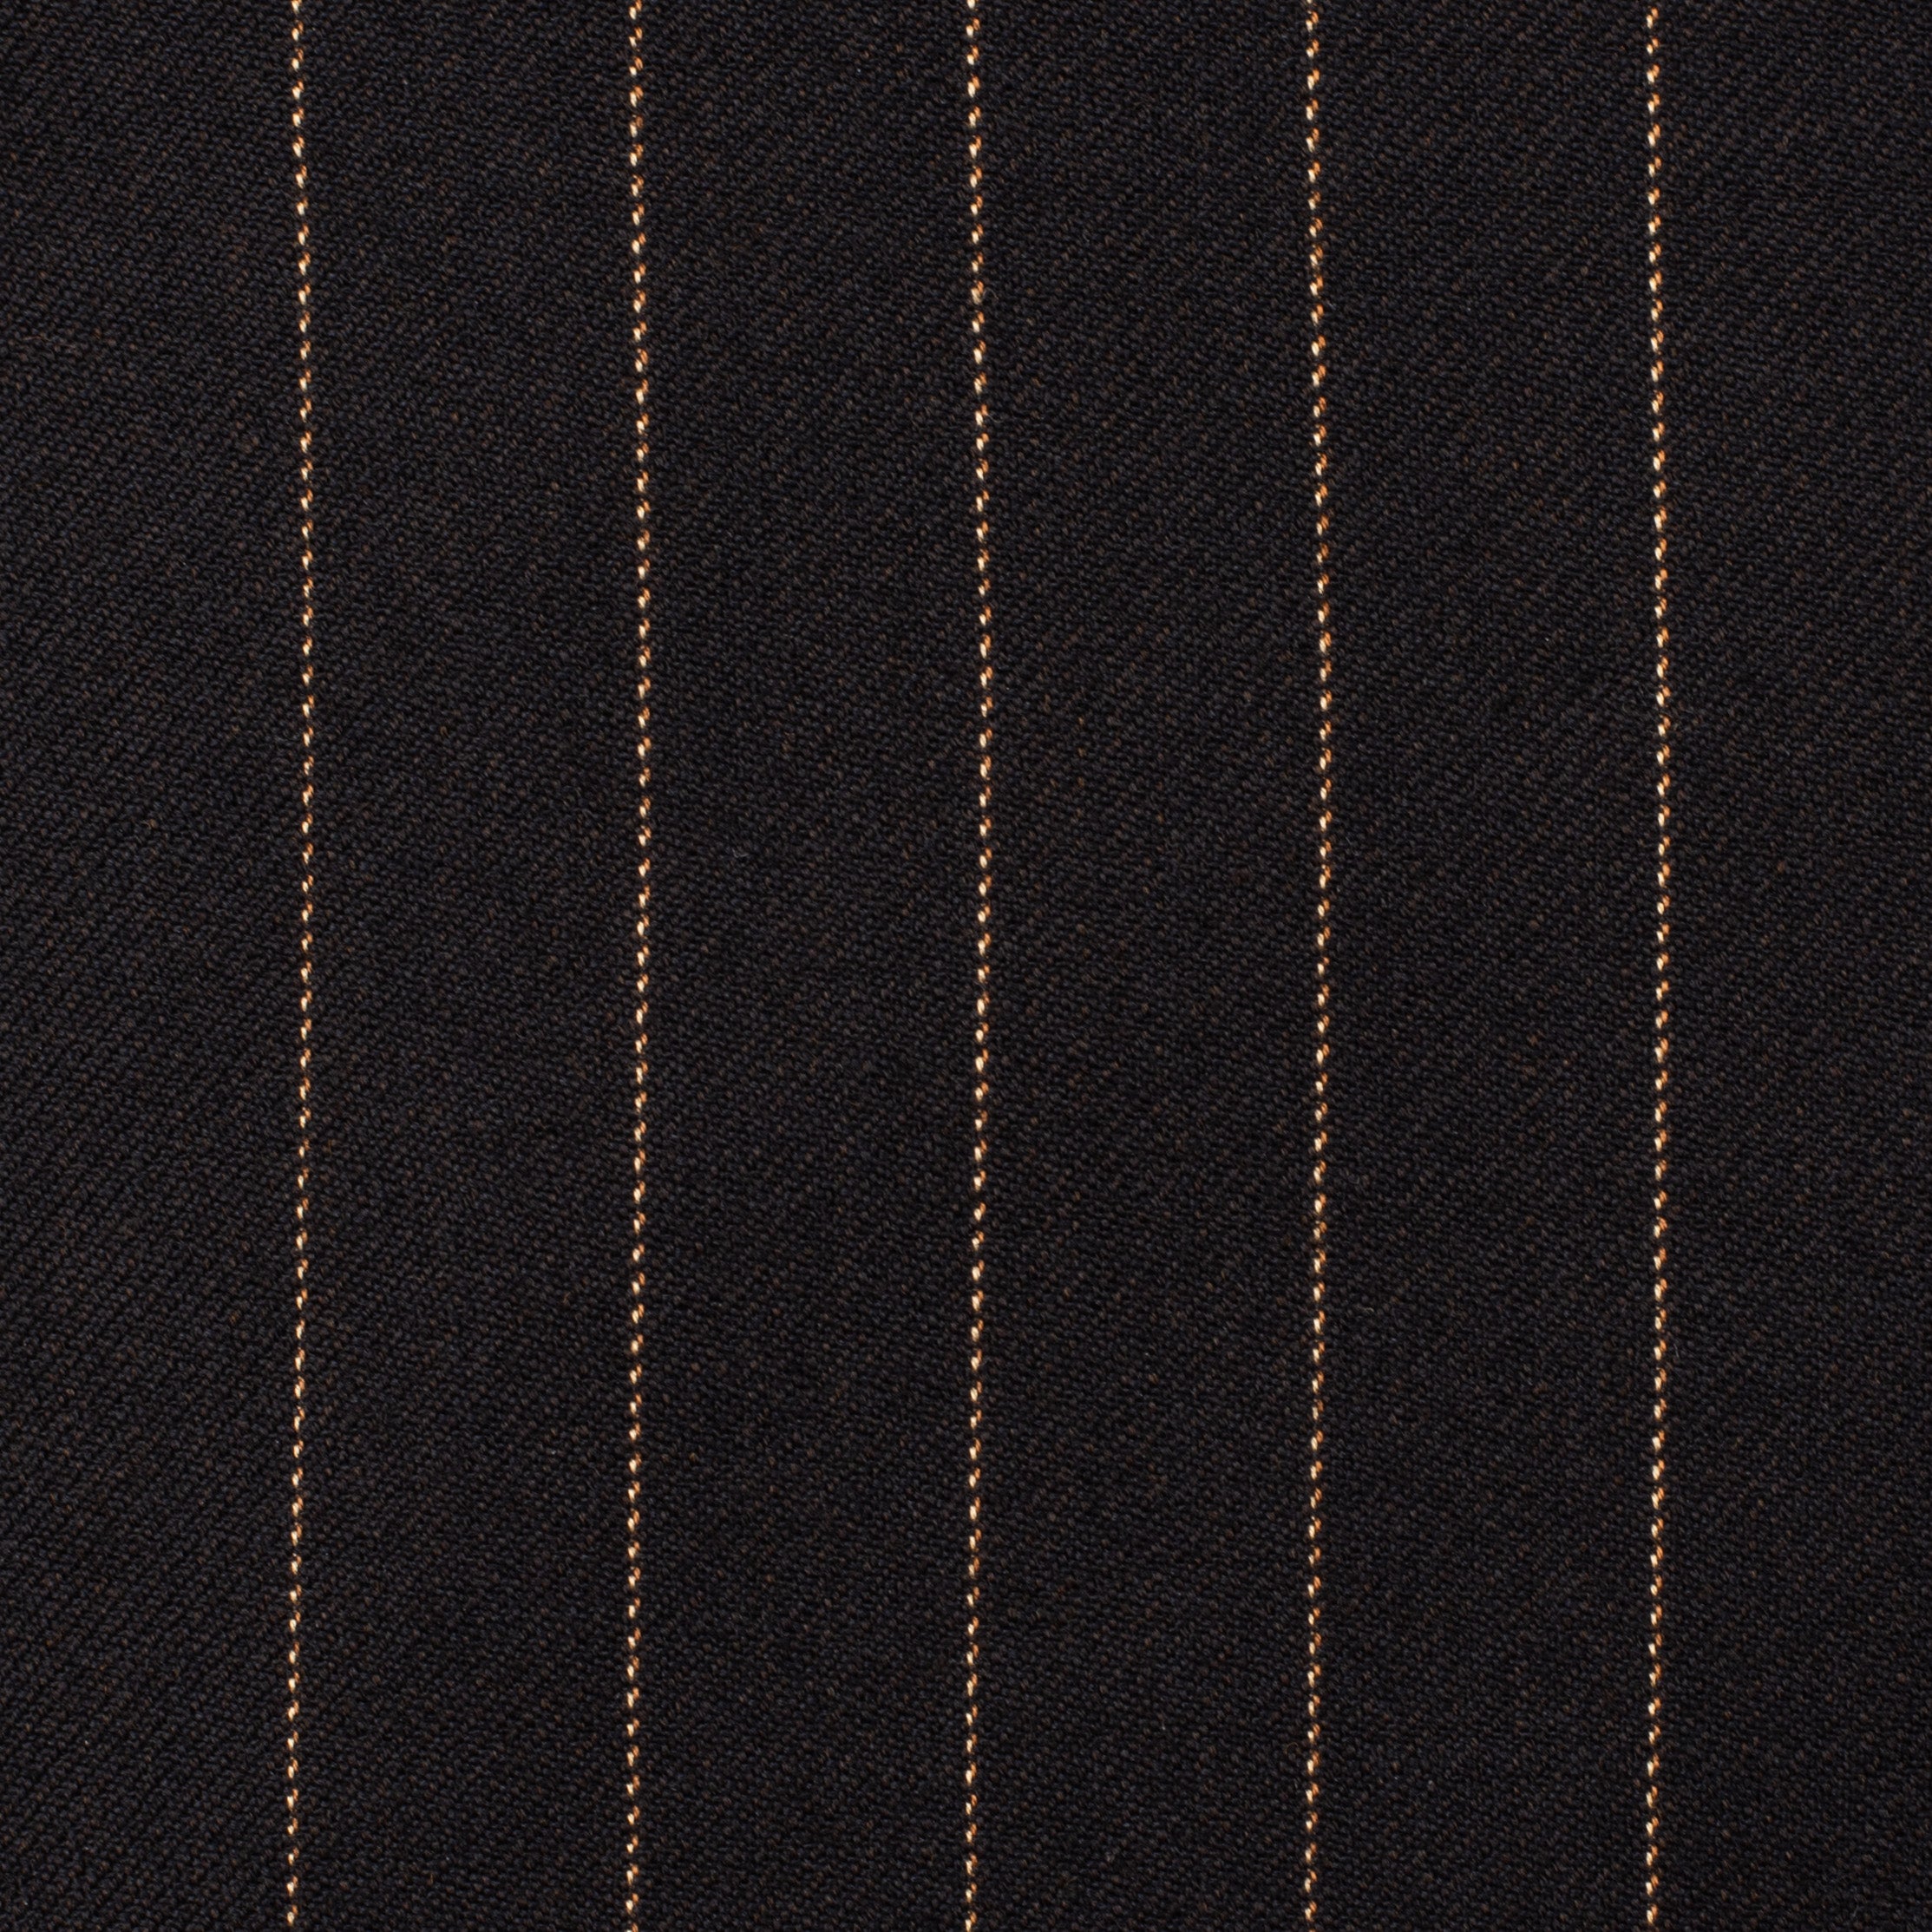 CESARE ATTOLINI Napoli Chocolate Brown Striped Wool Suit EU 48 NEW US 38 CESARE ATTOLINI